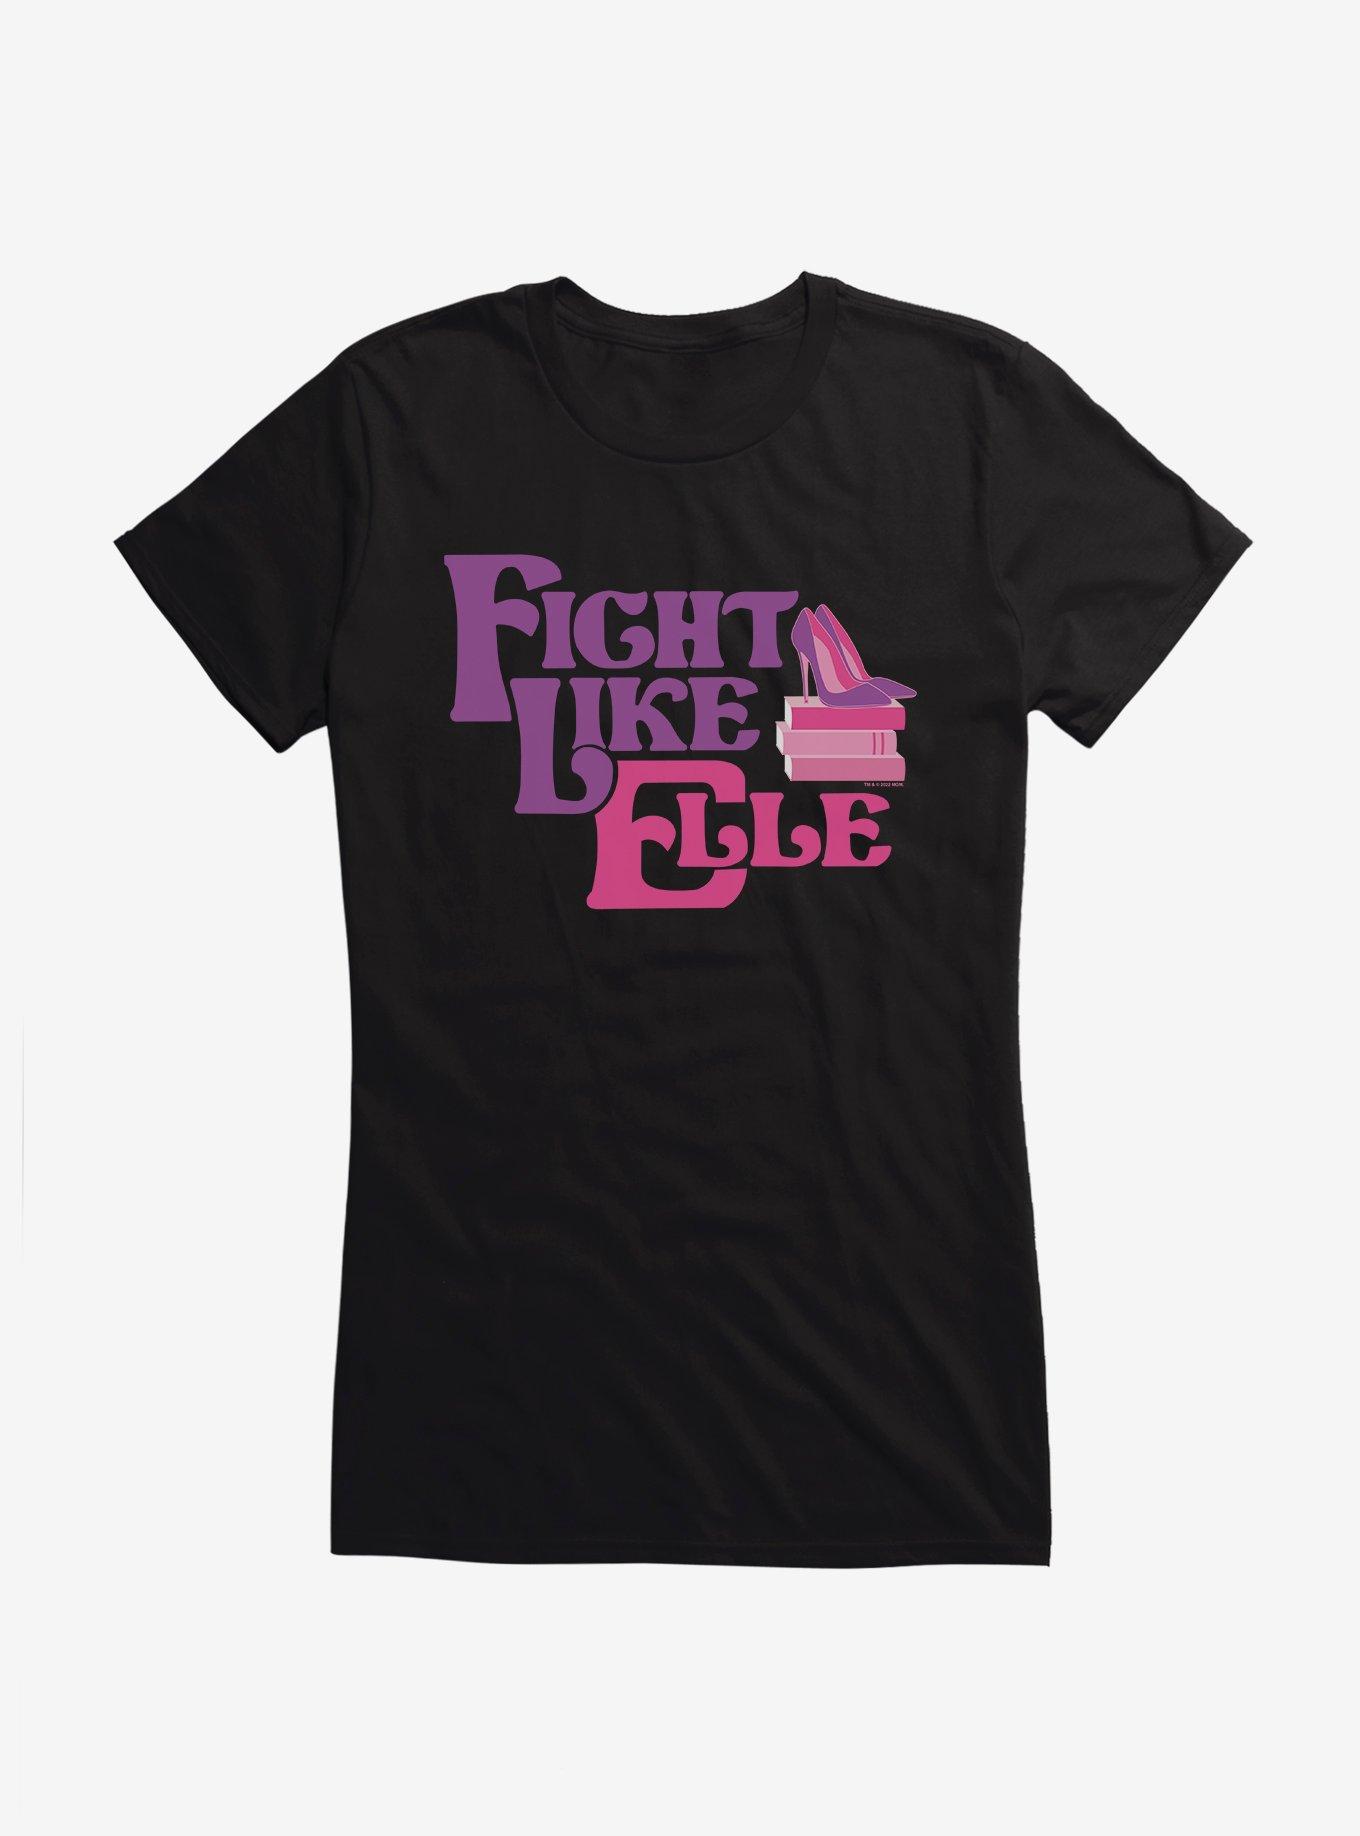 Legally Blonde Fight Like Elle Girls T-Shirt